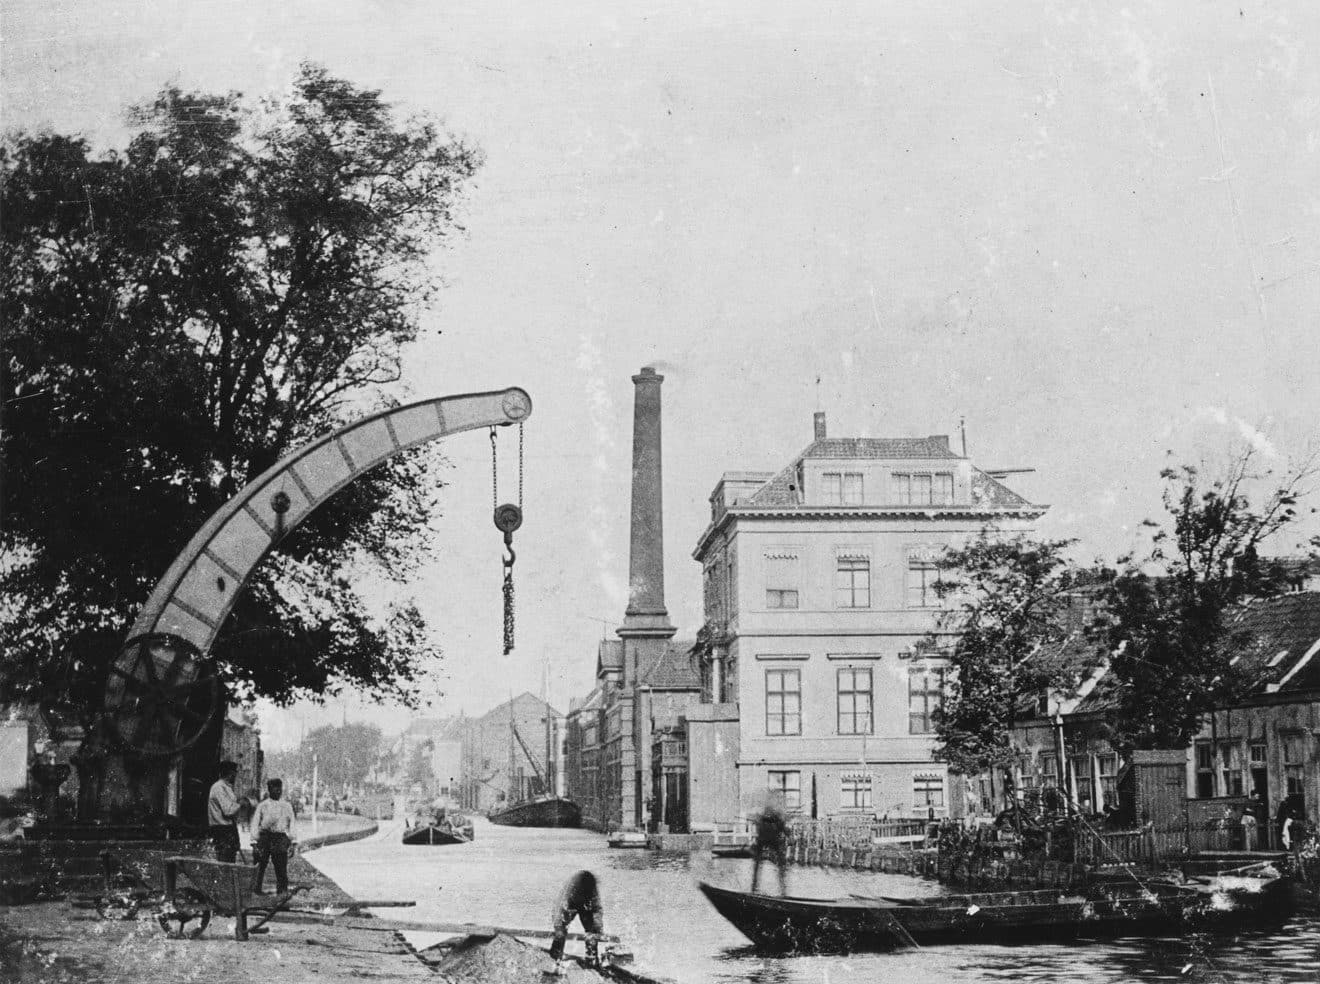 L.I. Enthoven & Co, ijzergieterij, Pletterijkade, ca. 1870